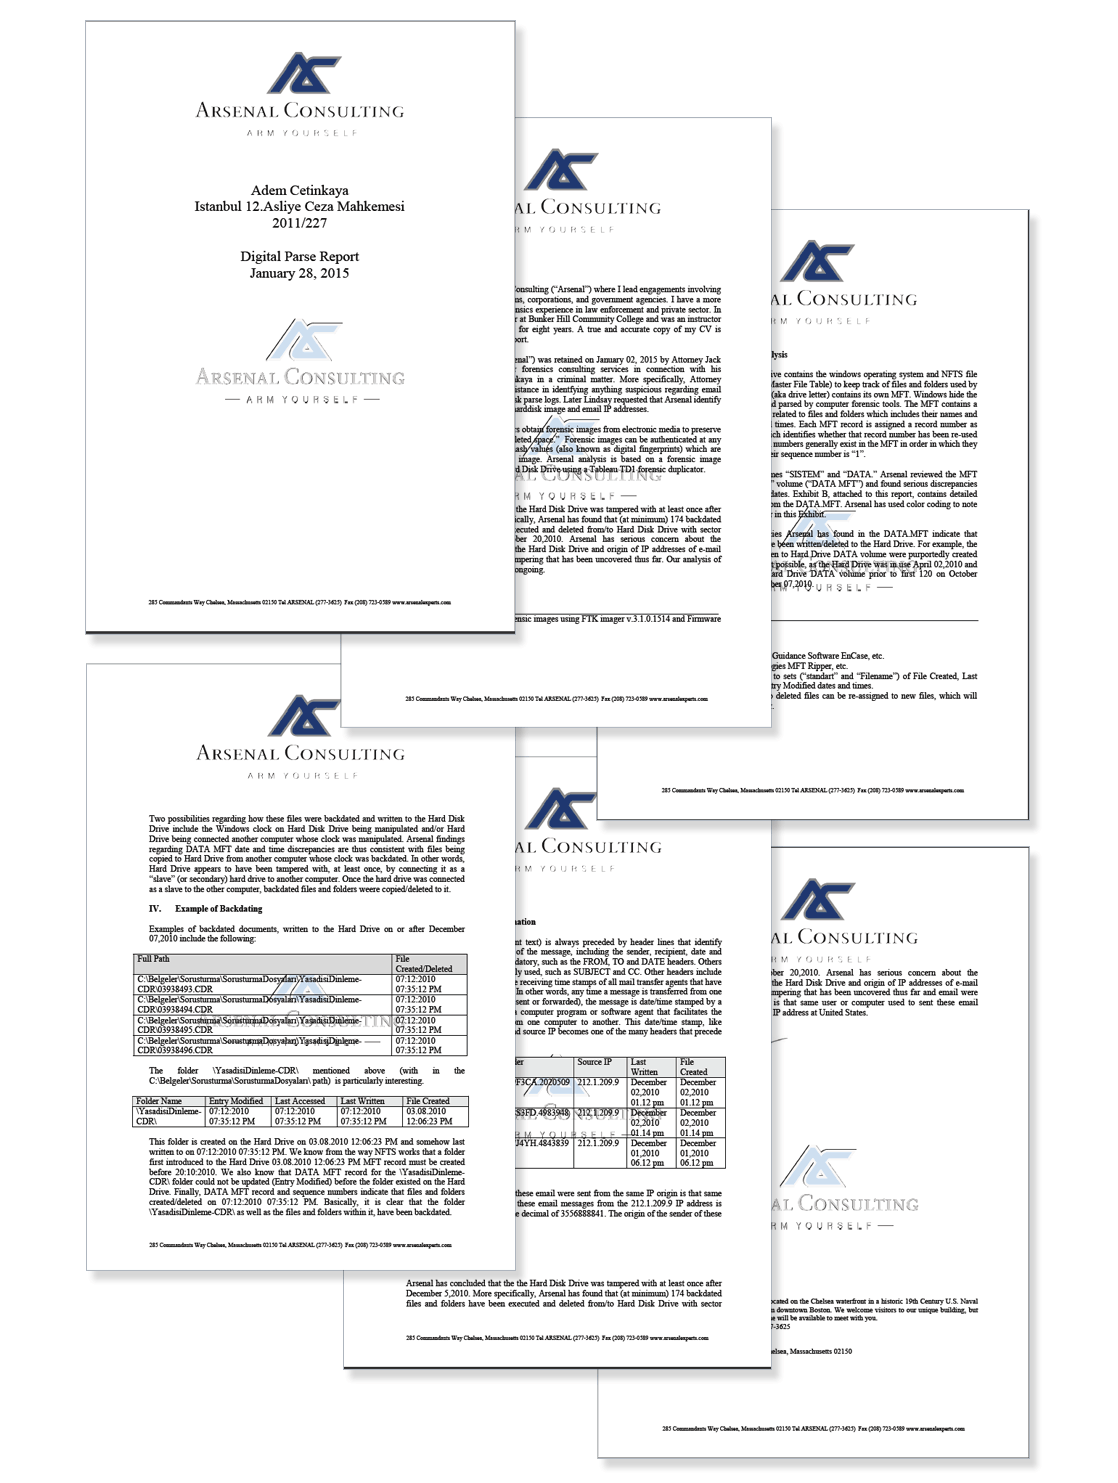 Email Attachment: EK-2.pdf